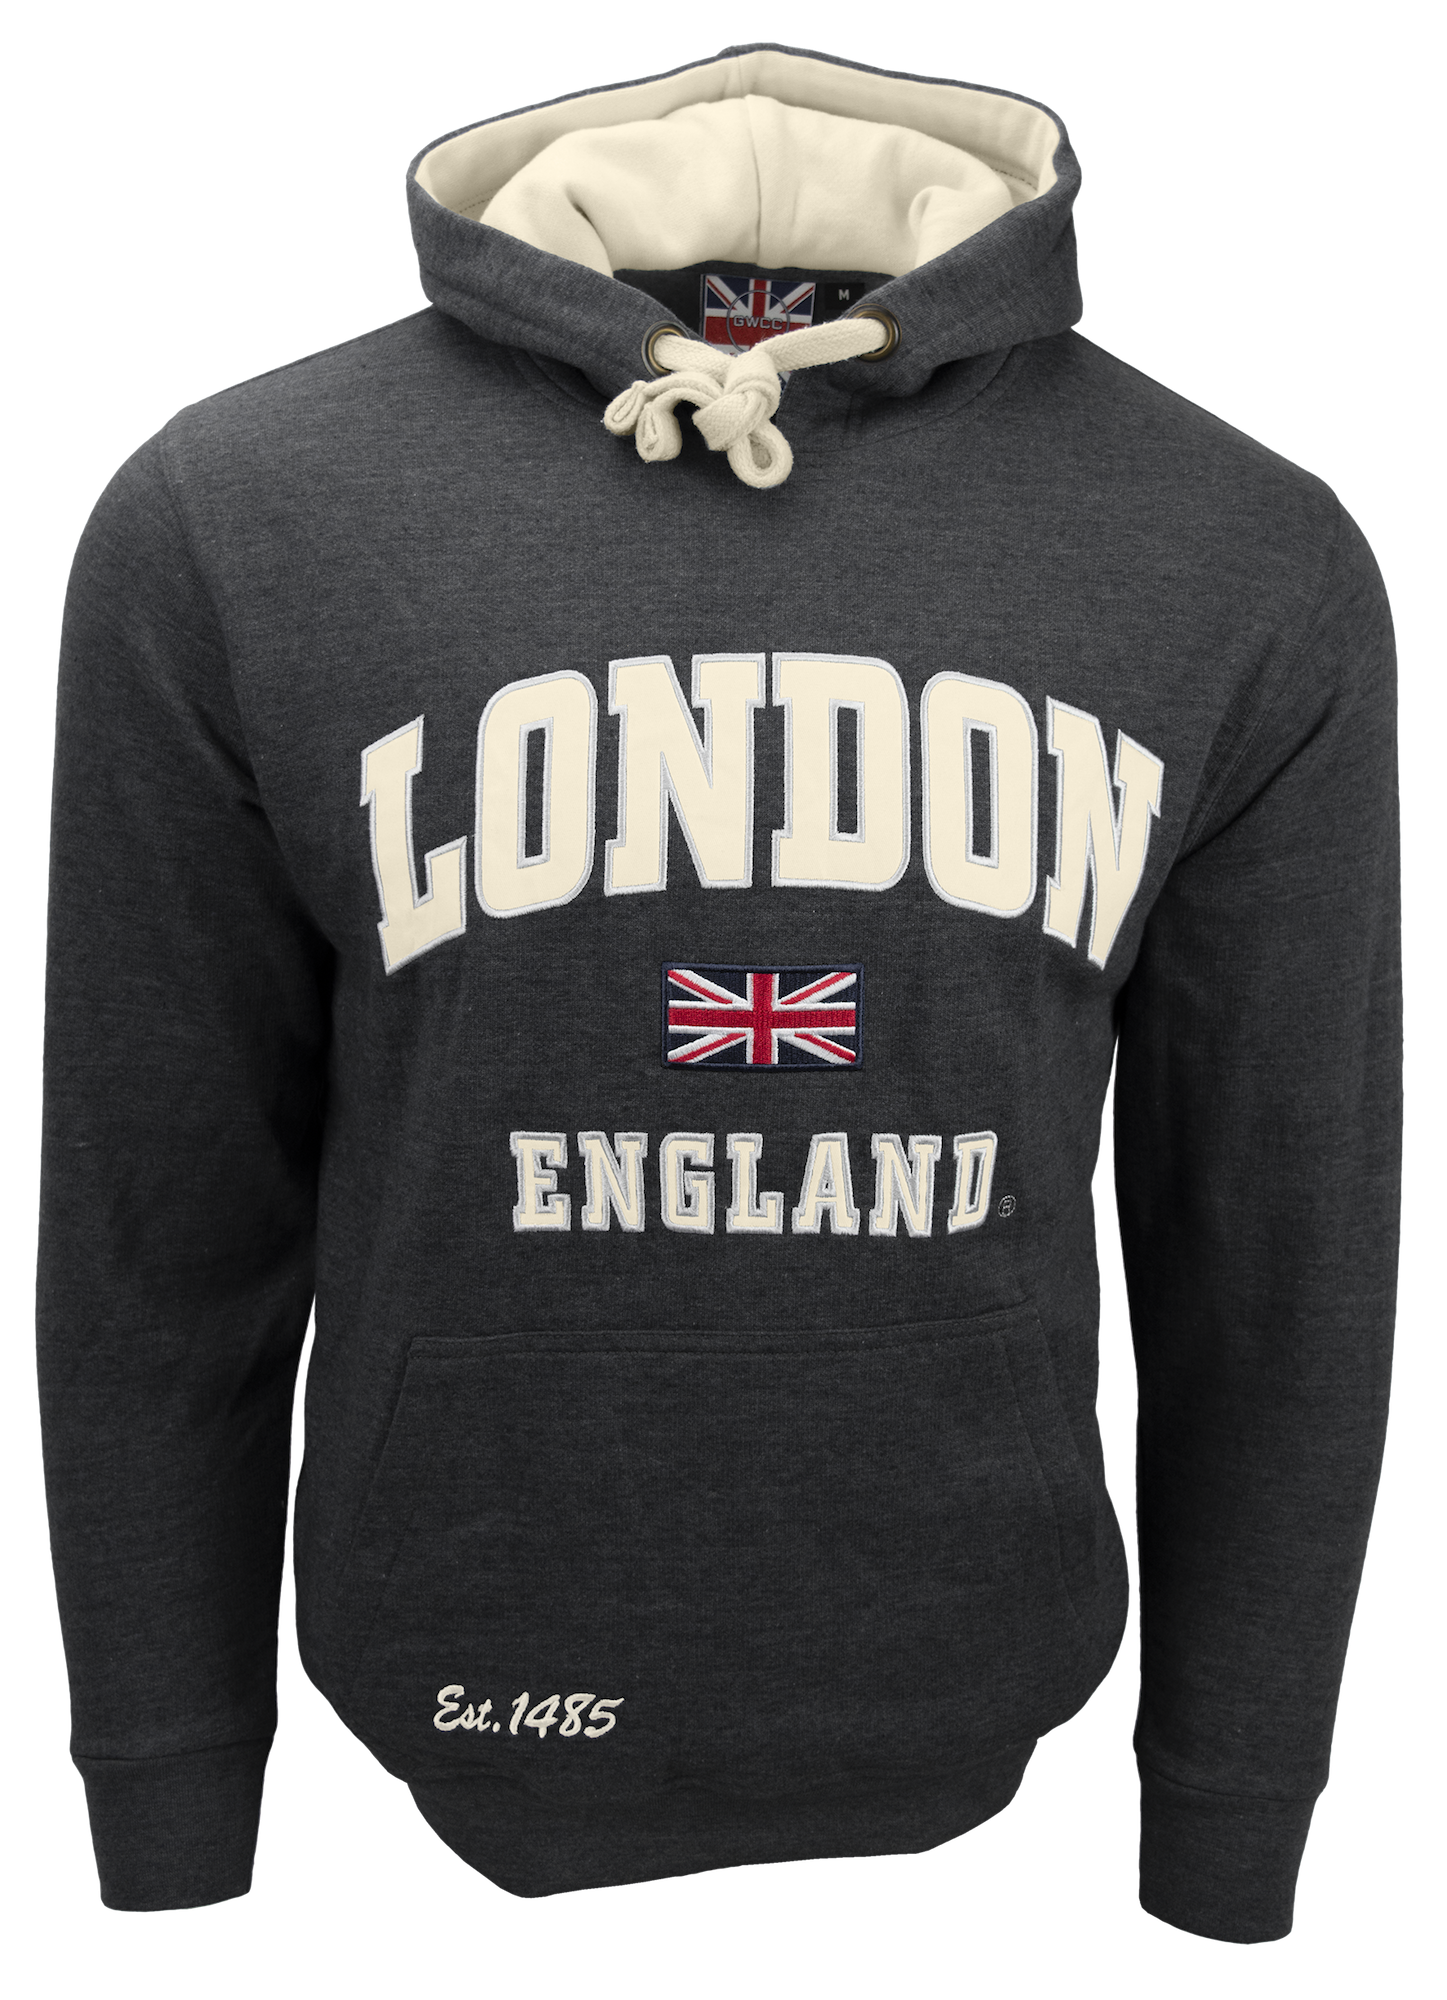 Unisex London England Hoodie Hooded Sweatshirt Charcoal New 2020 Colour - British Heritage Brands